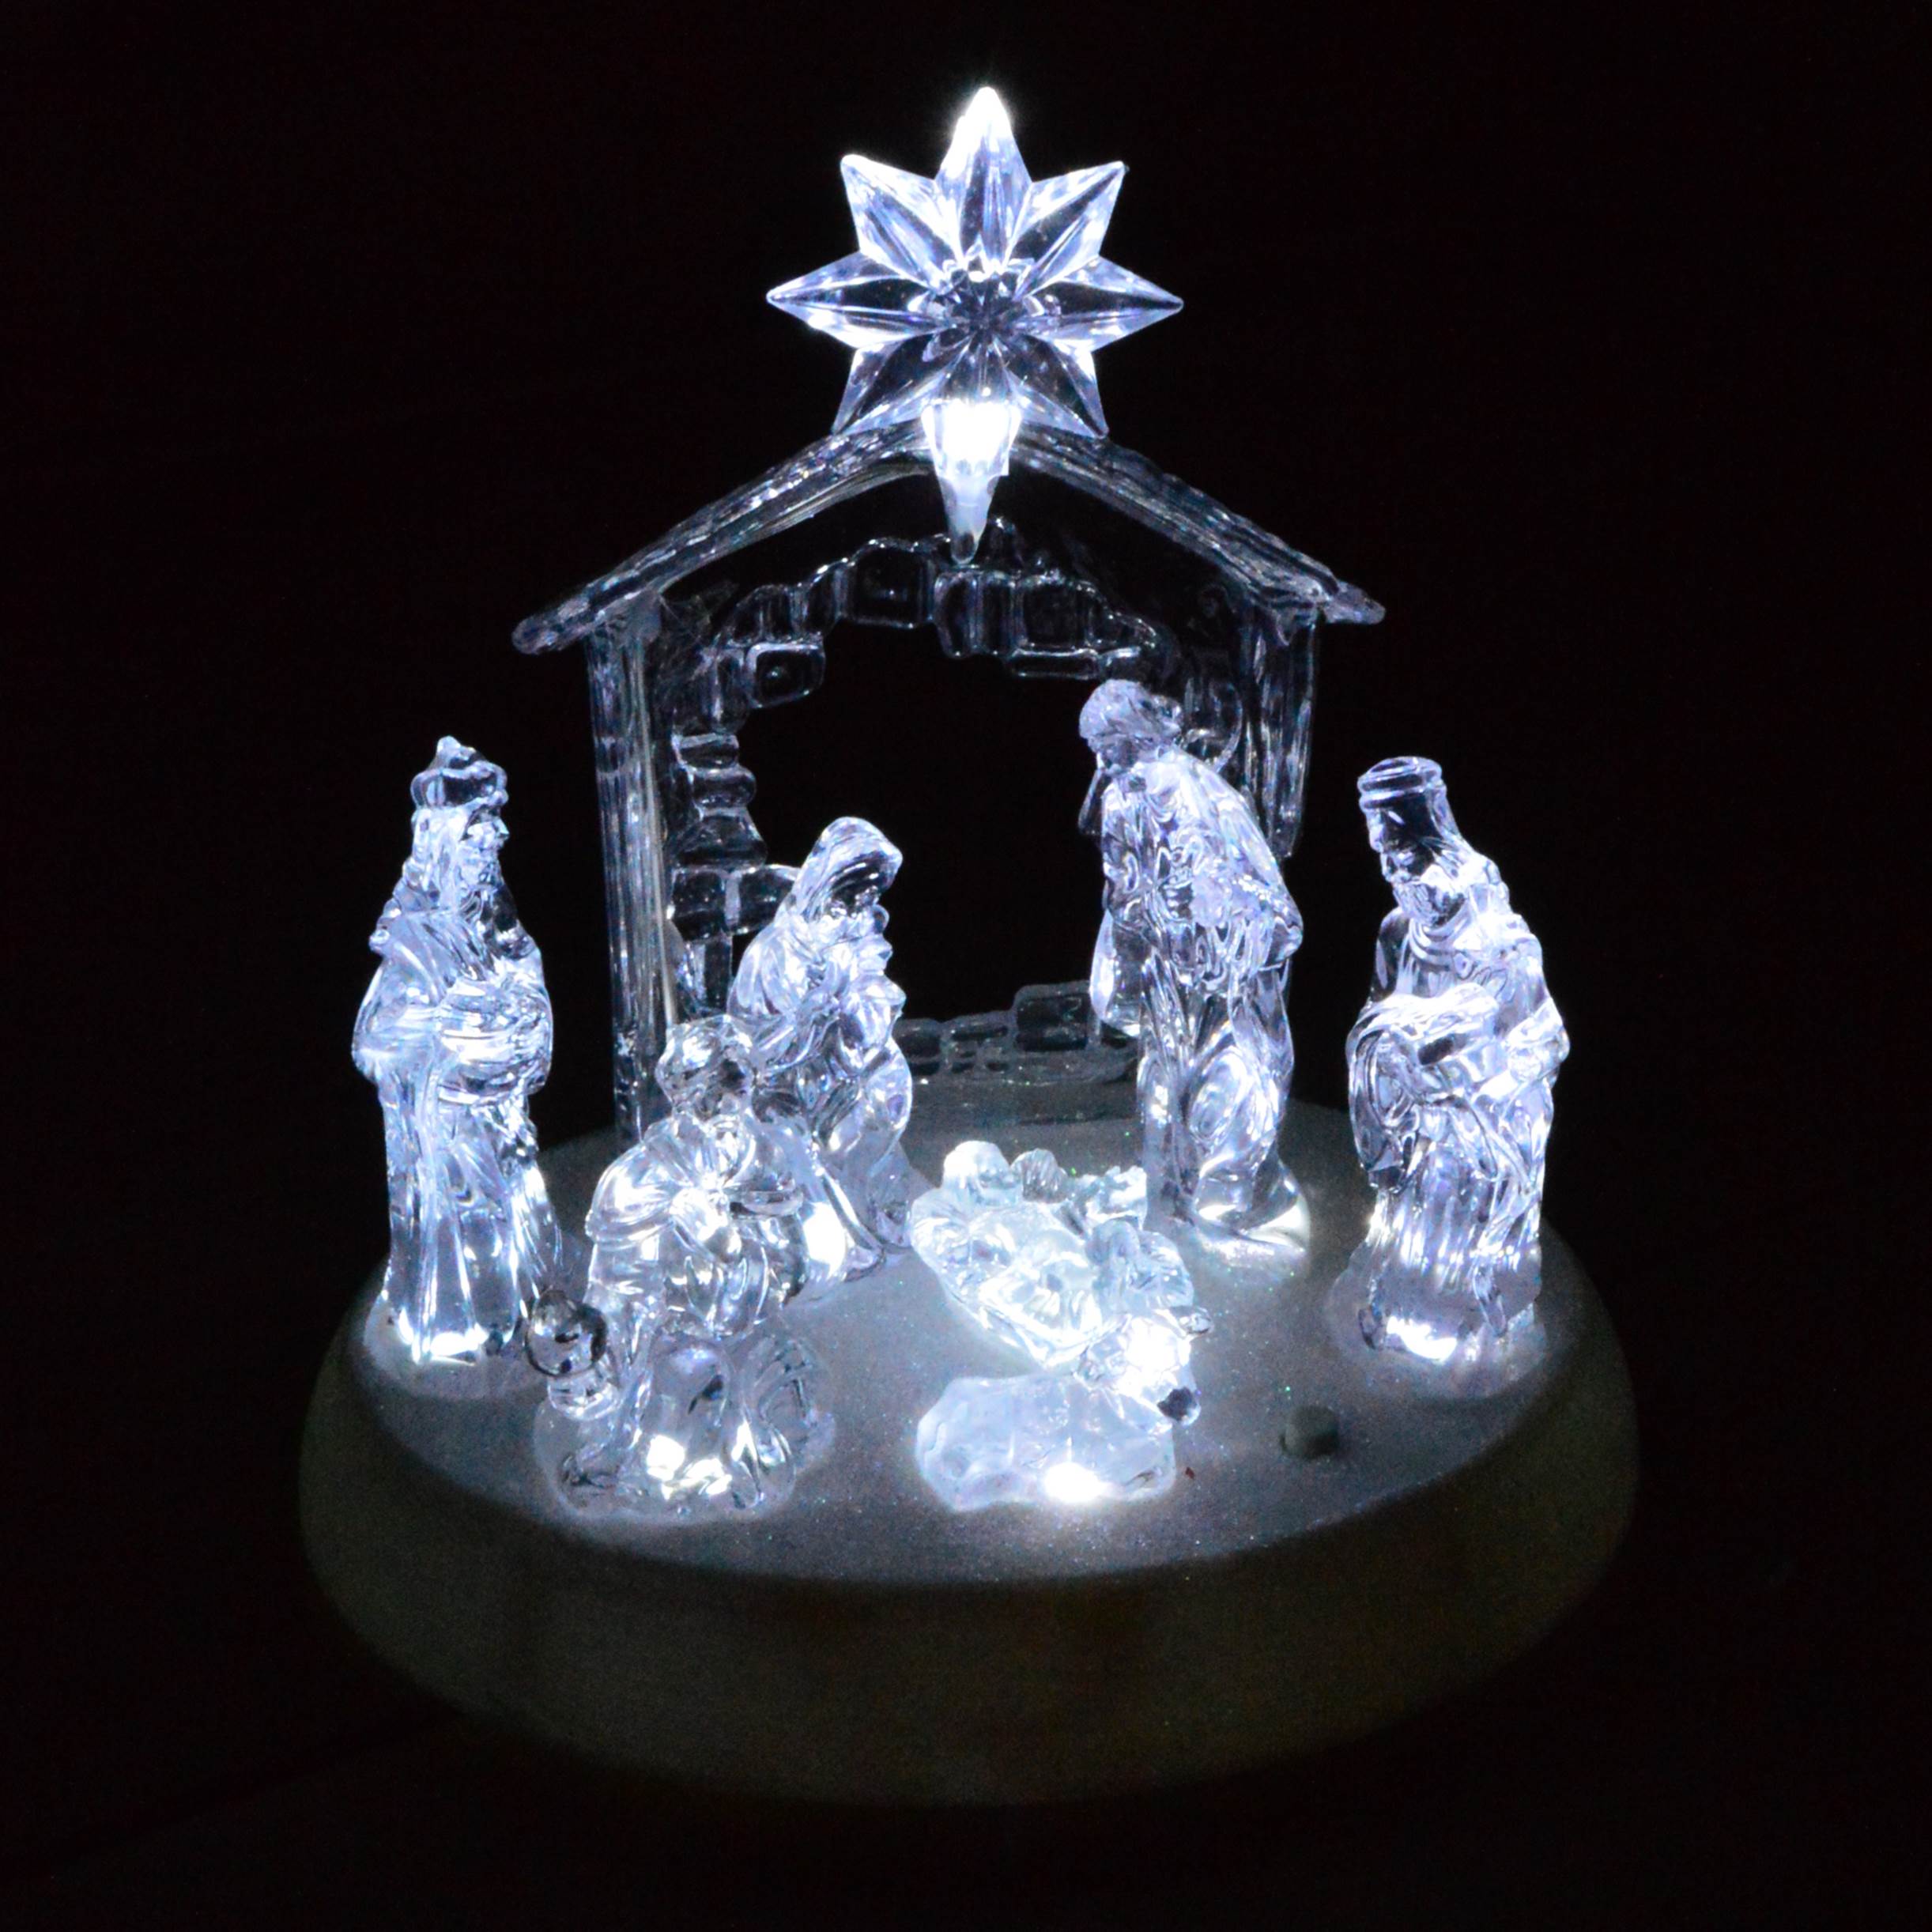 20cm Premier Acrylic Nativity Scene Christmas Decoration - Lights Up & Sings ...2444 x 2444